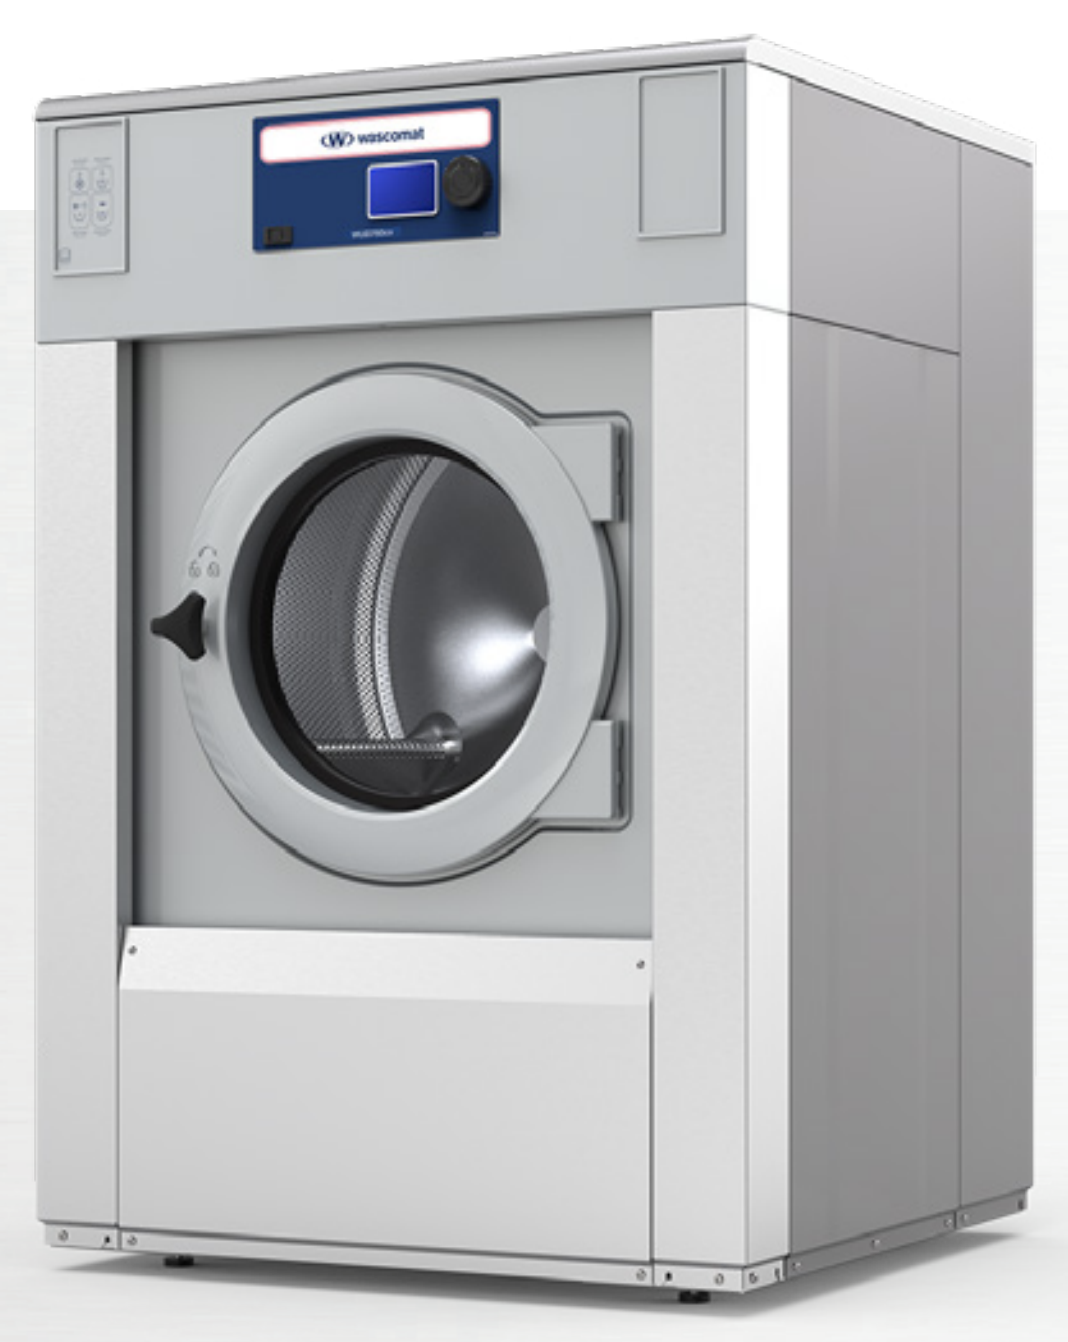 New 2022 Wascomat Wud745 Opl - Automatic Laundry Service Of Va, Inc.